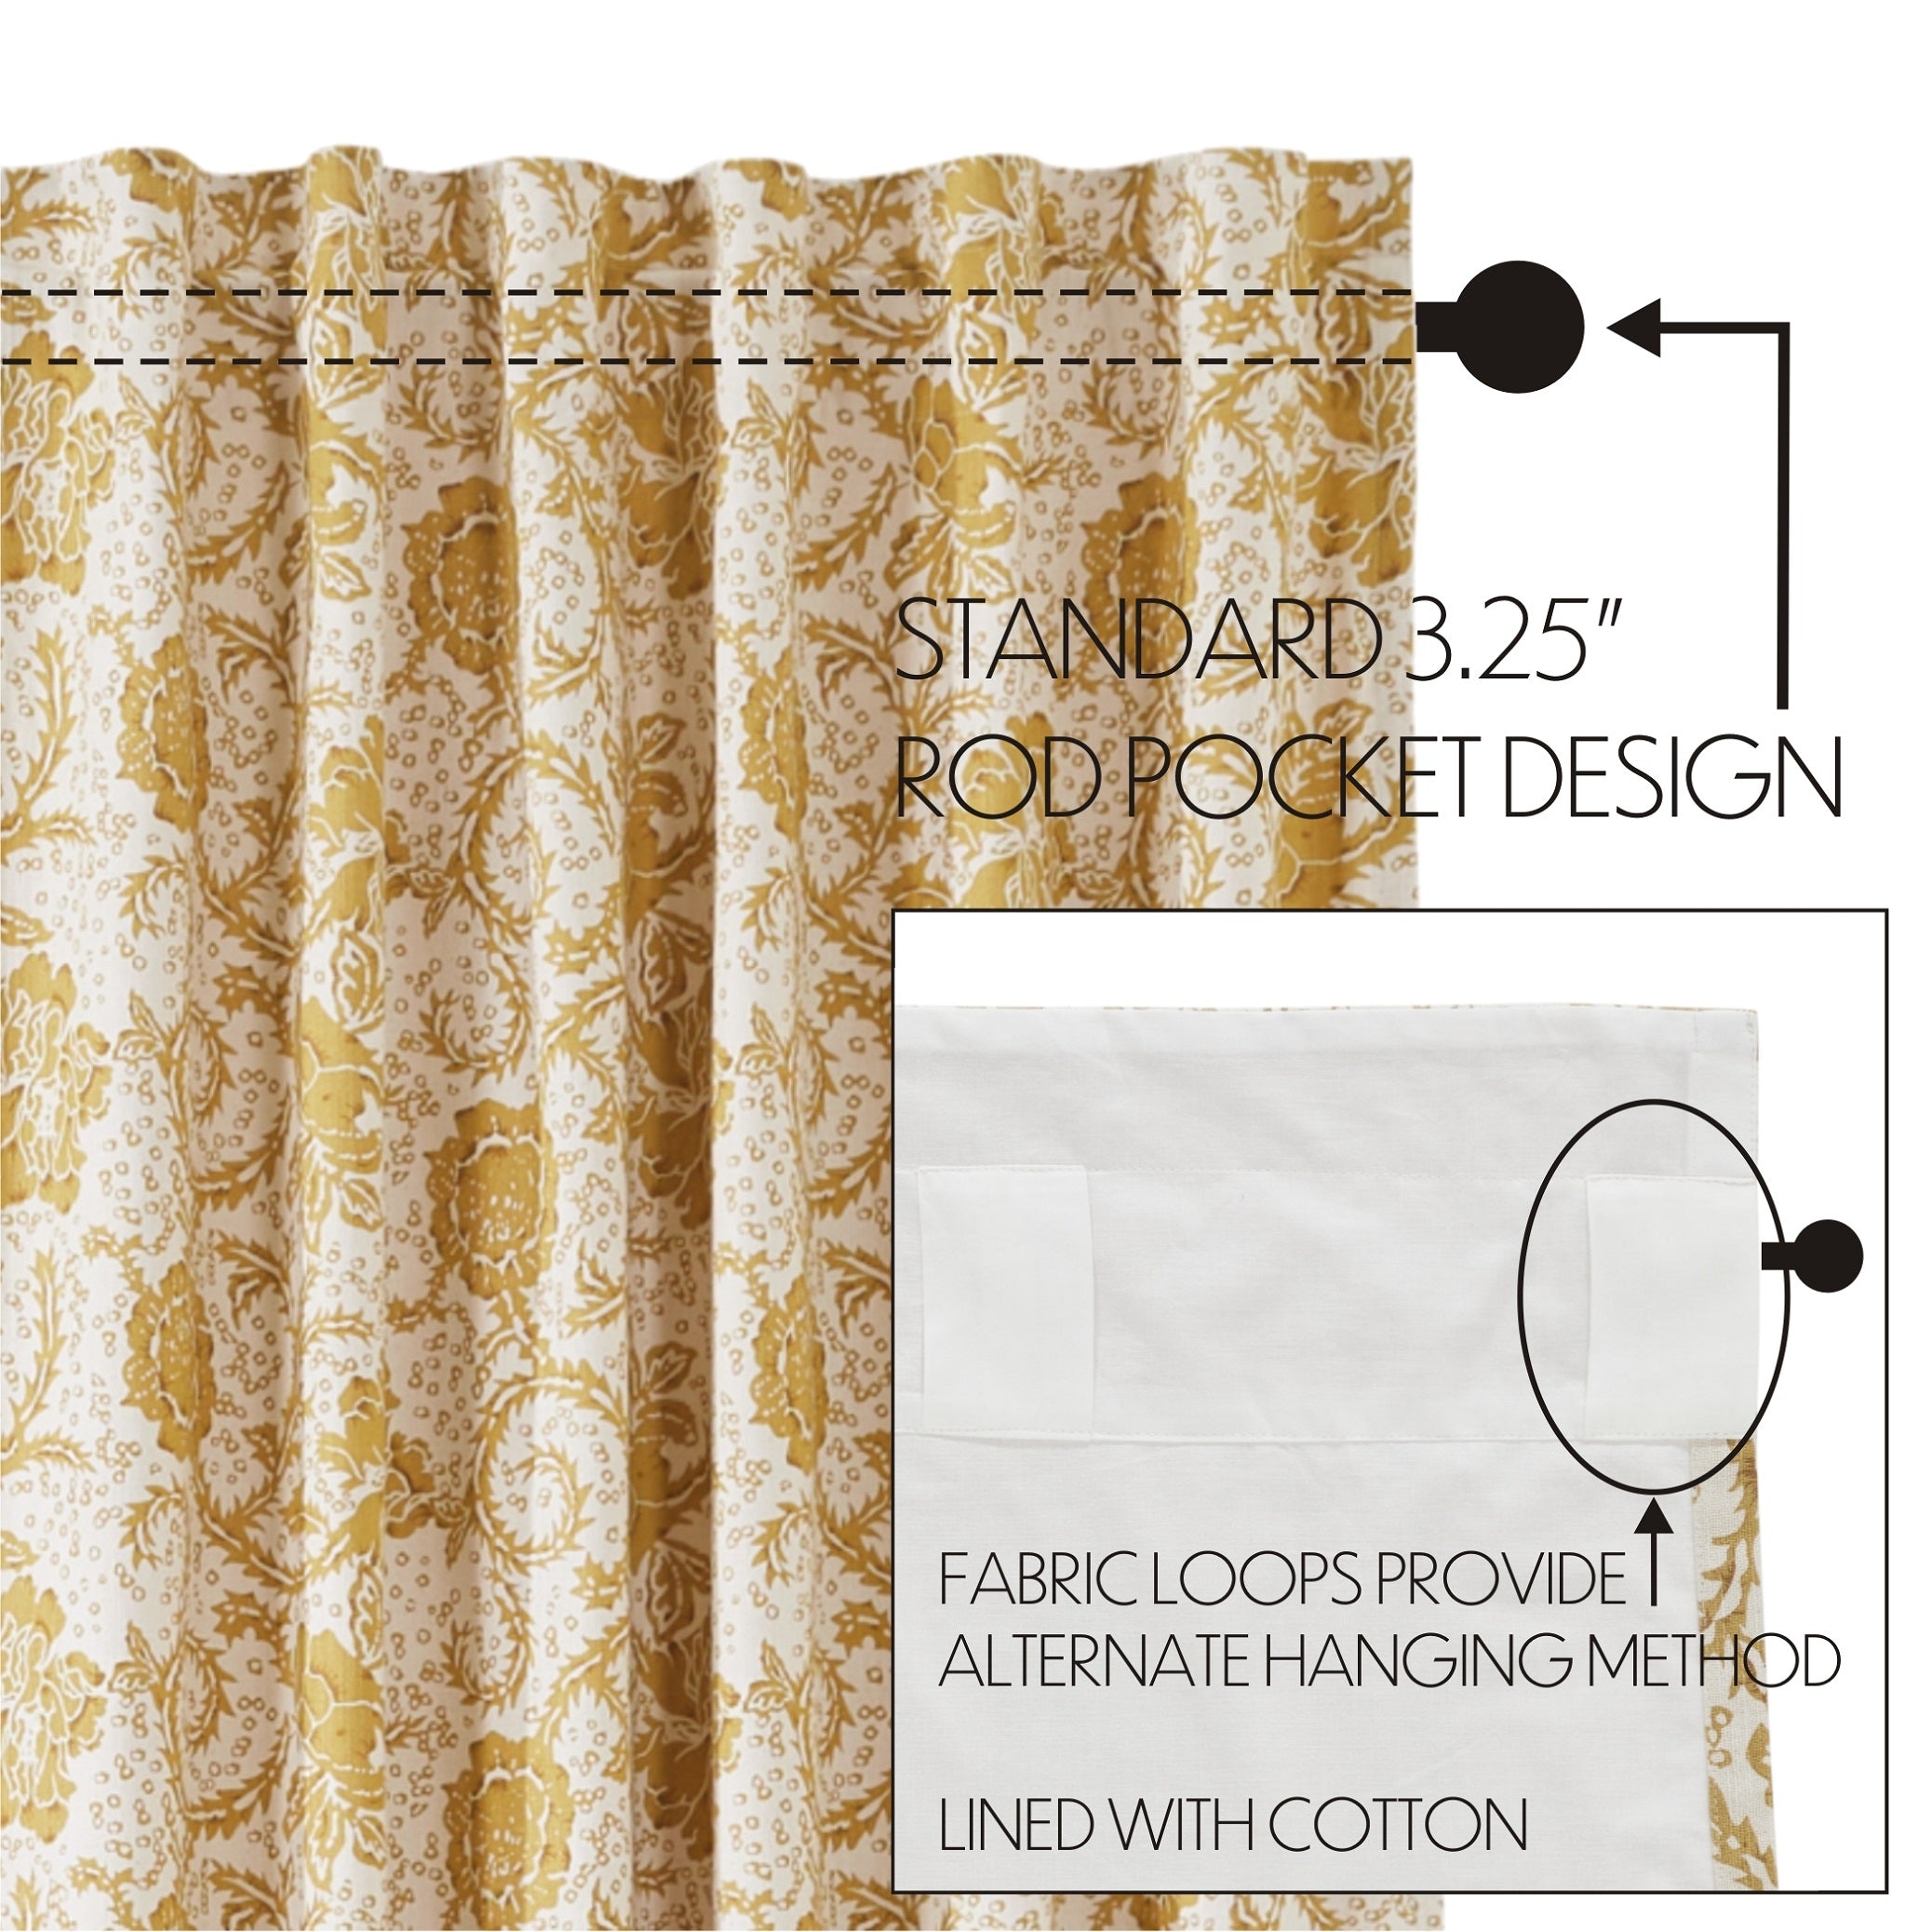 Dorset Gold Floral Valance Curtain 16x72 VHC Brands